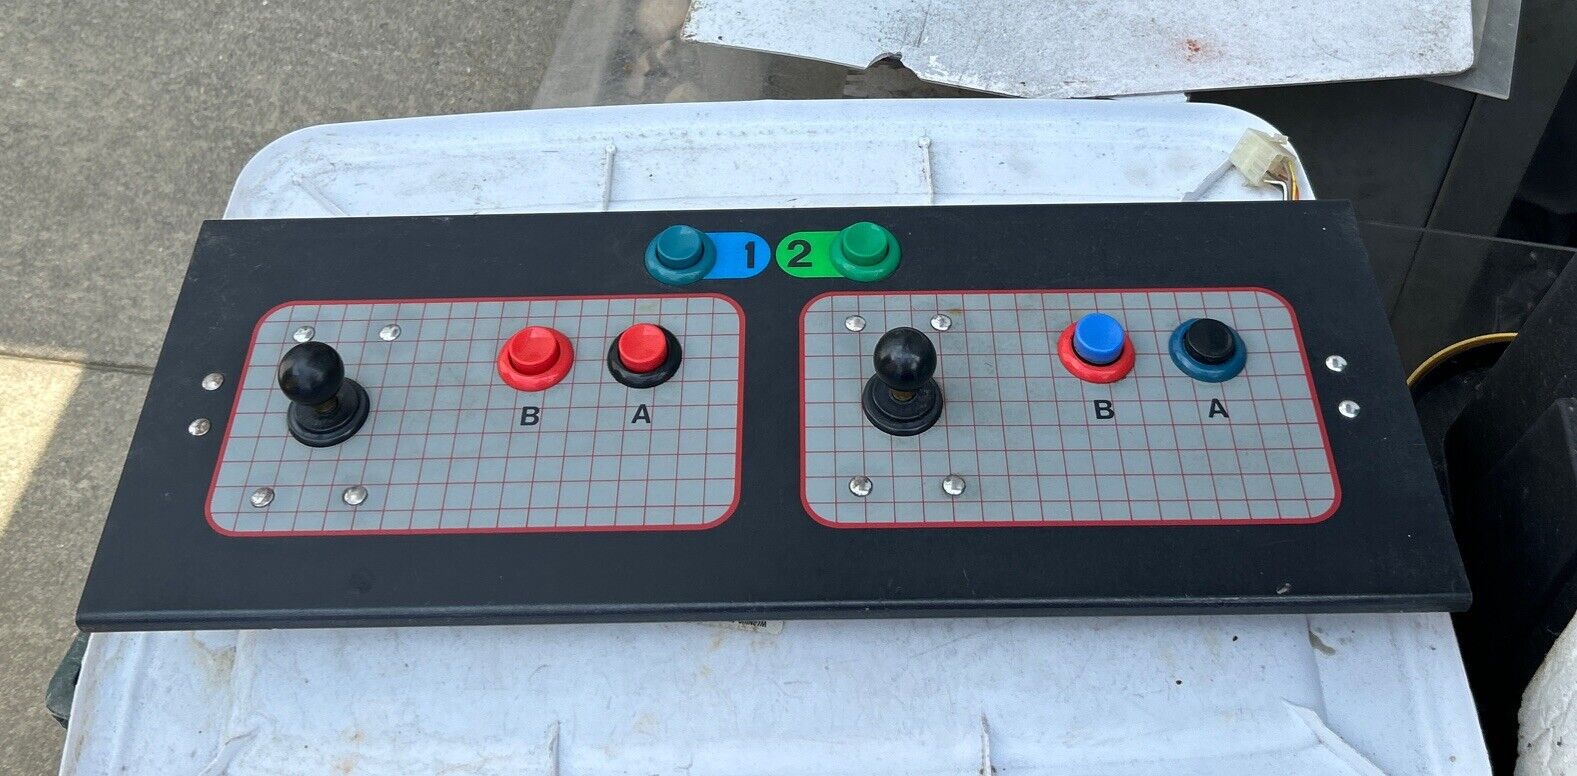 Original Vintage Nintendo Vs System Metal Control PaNel Arcade video Game If26